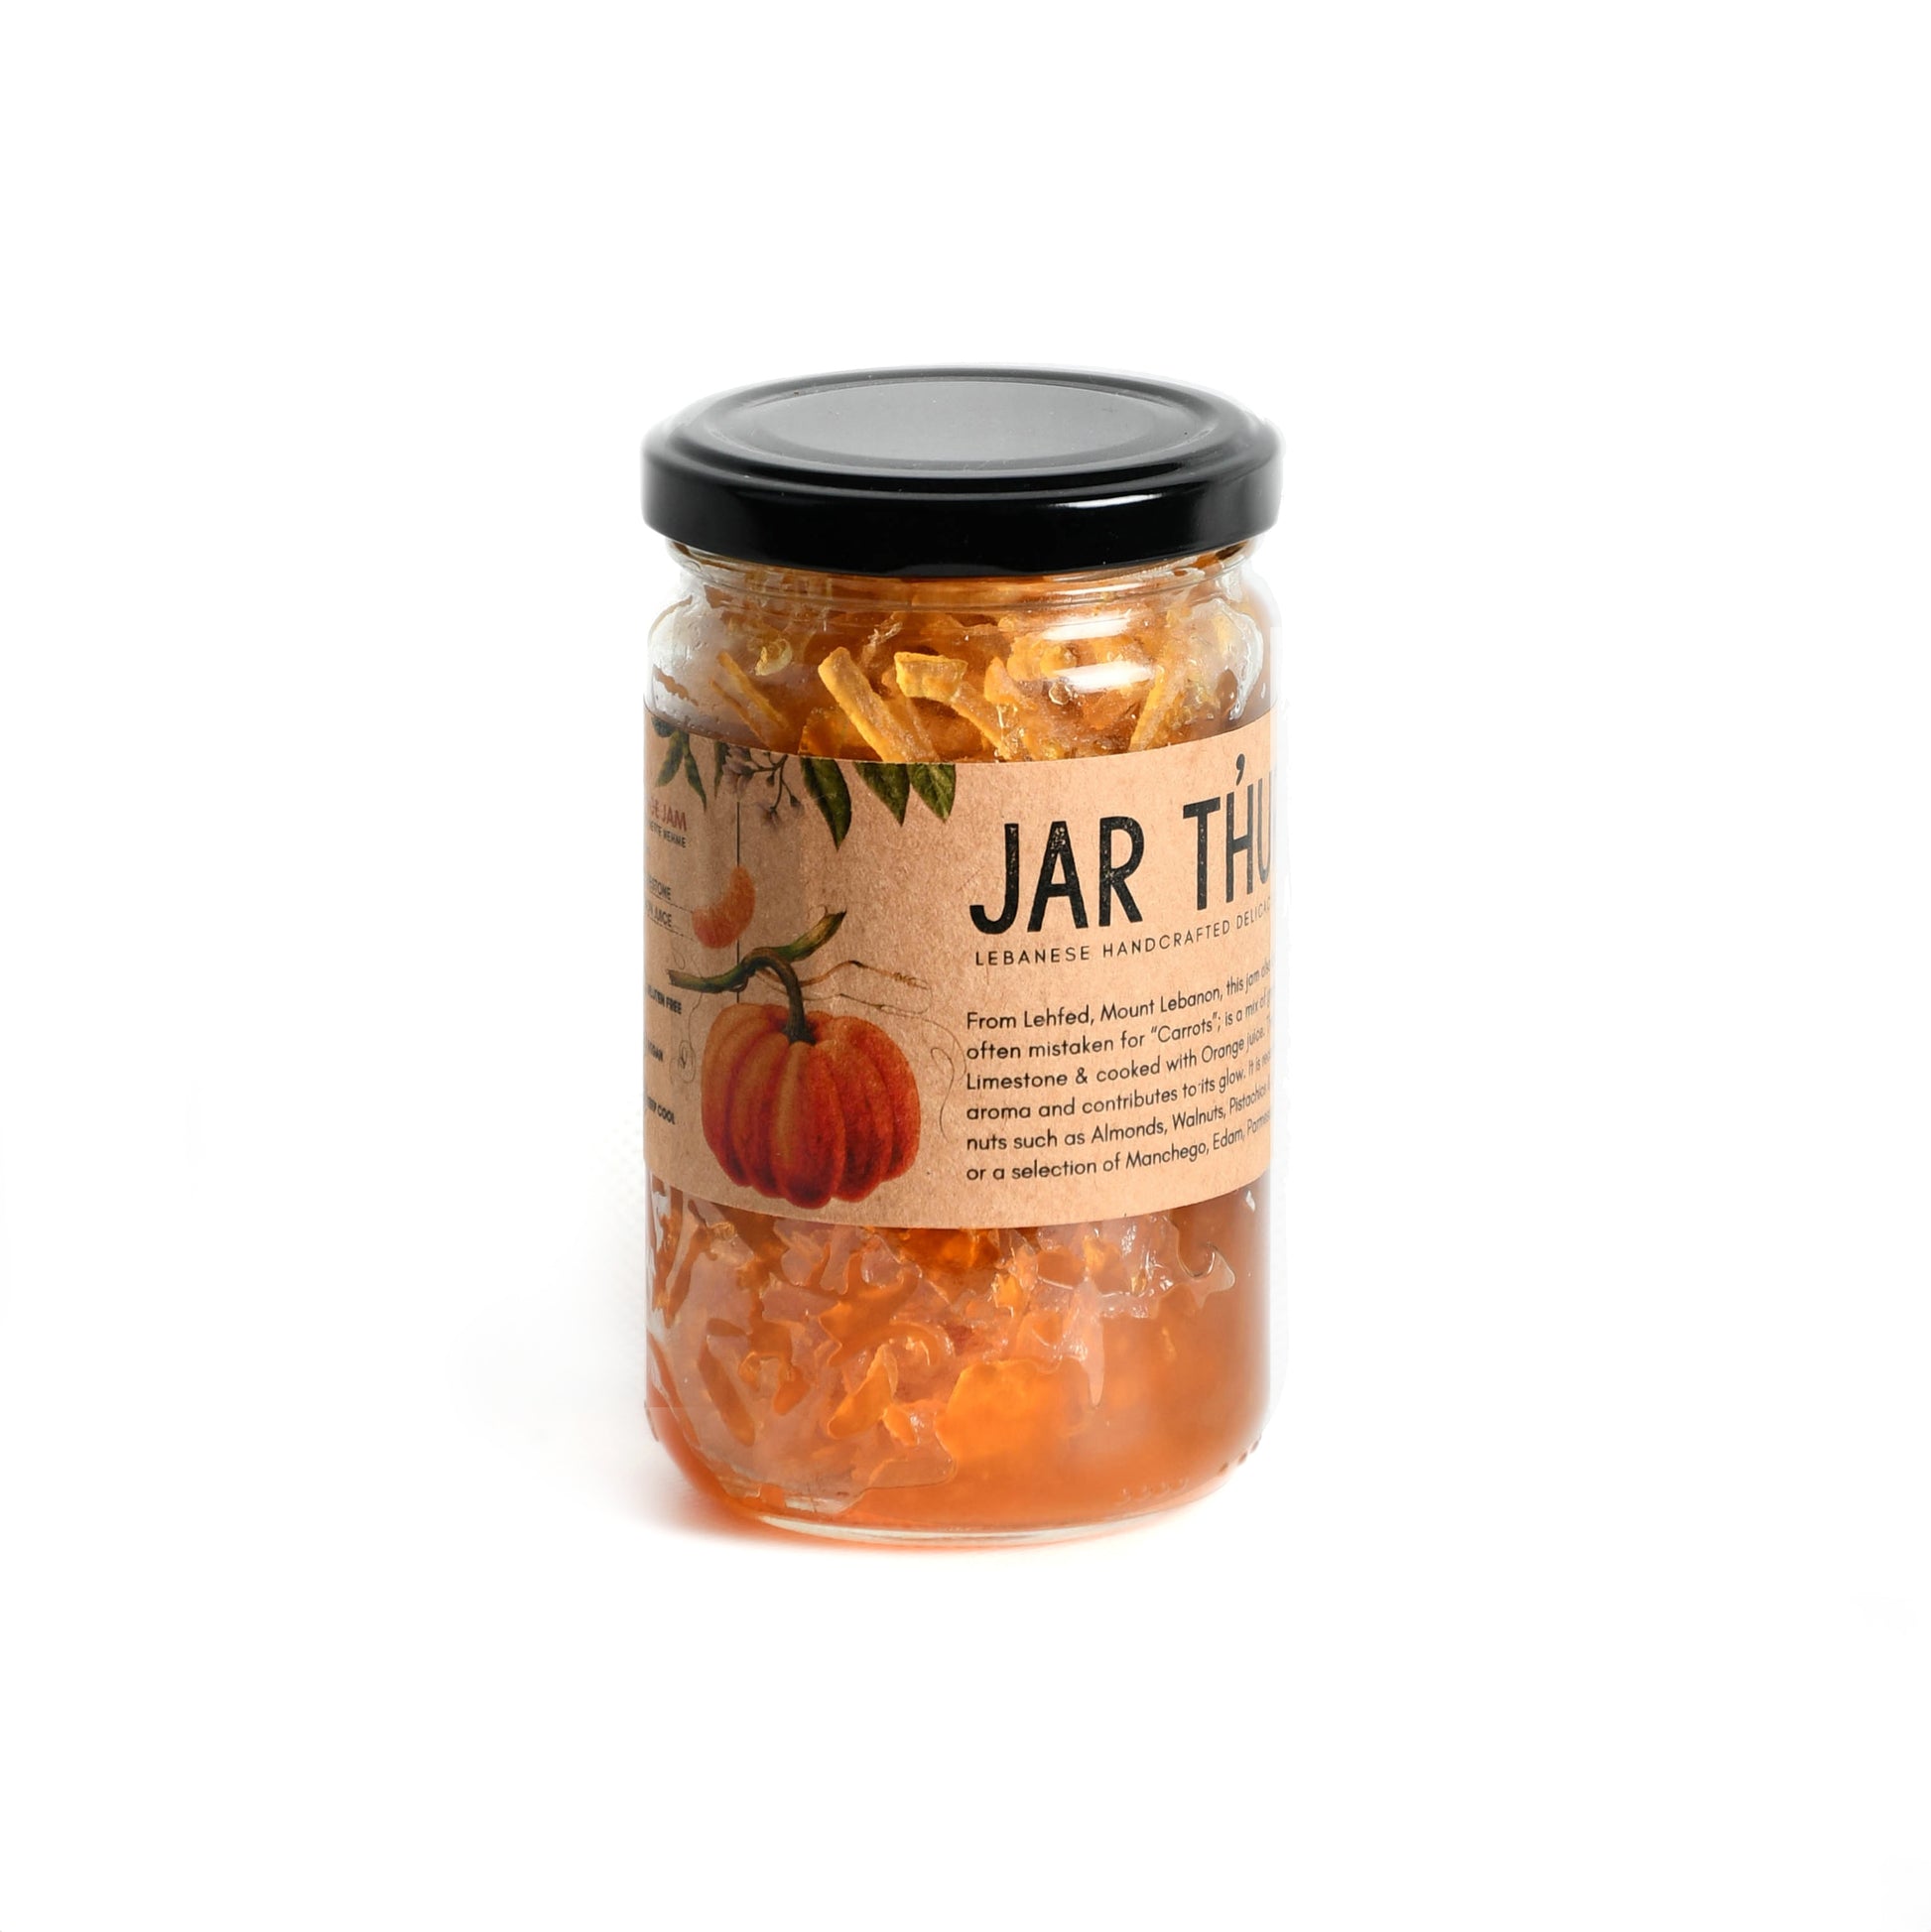 pumpkin and orange blossom jam in a glass jar